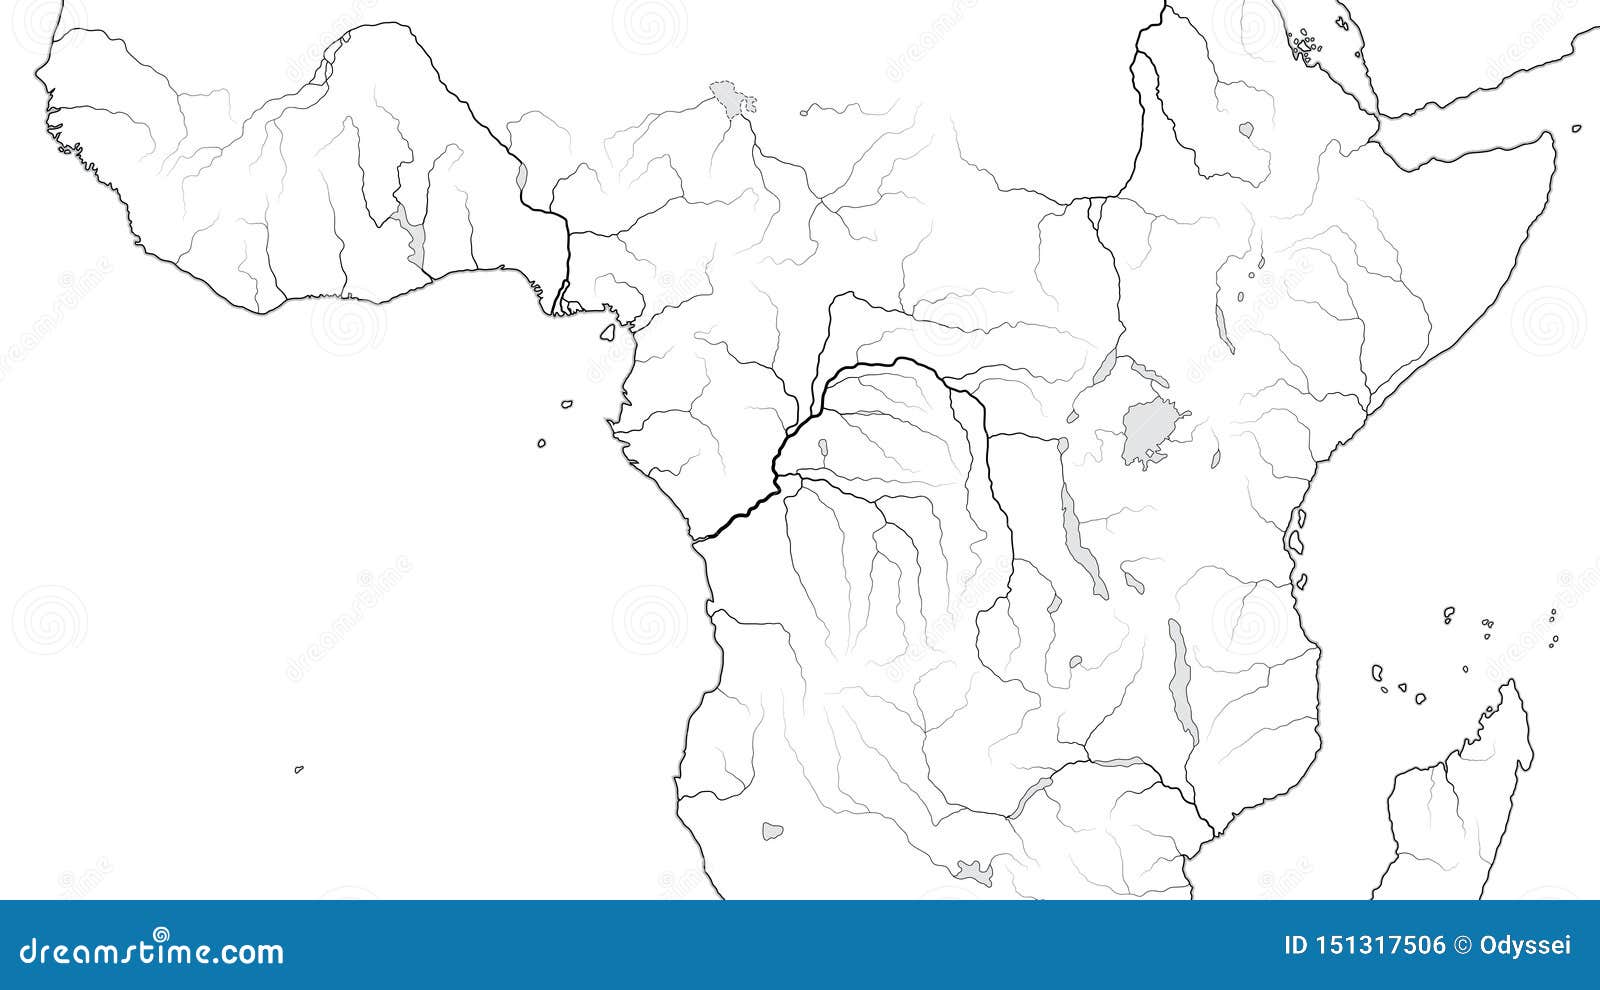 world map of equatorial africa region: central africa, congo, zaÃ¯re, nigeria, kenya, tanzania. geographic chart.